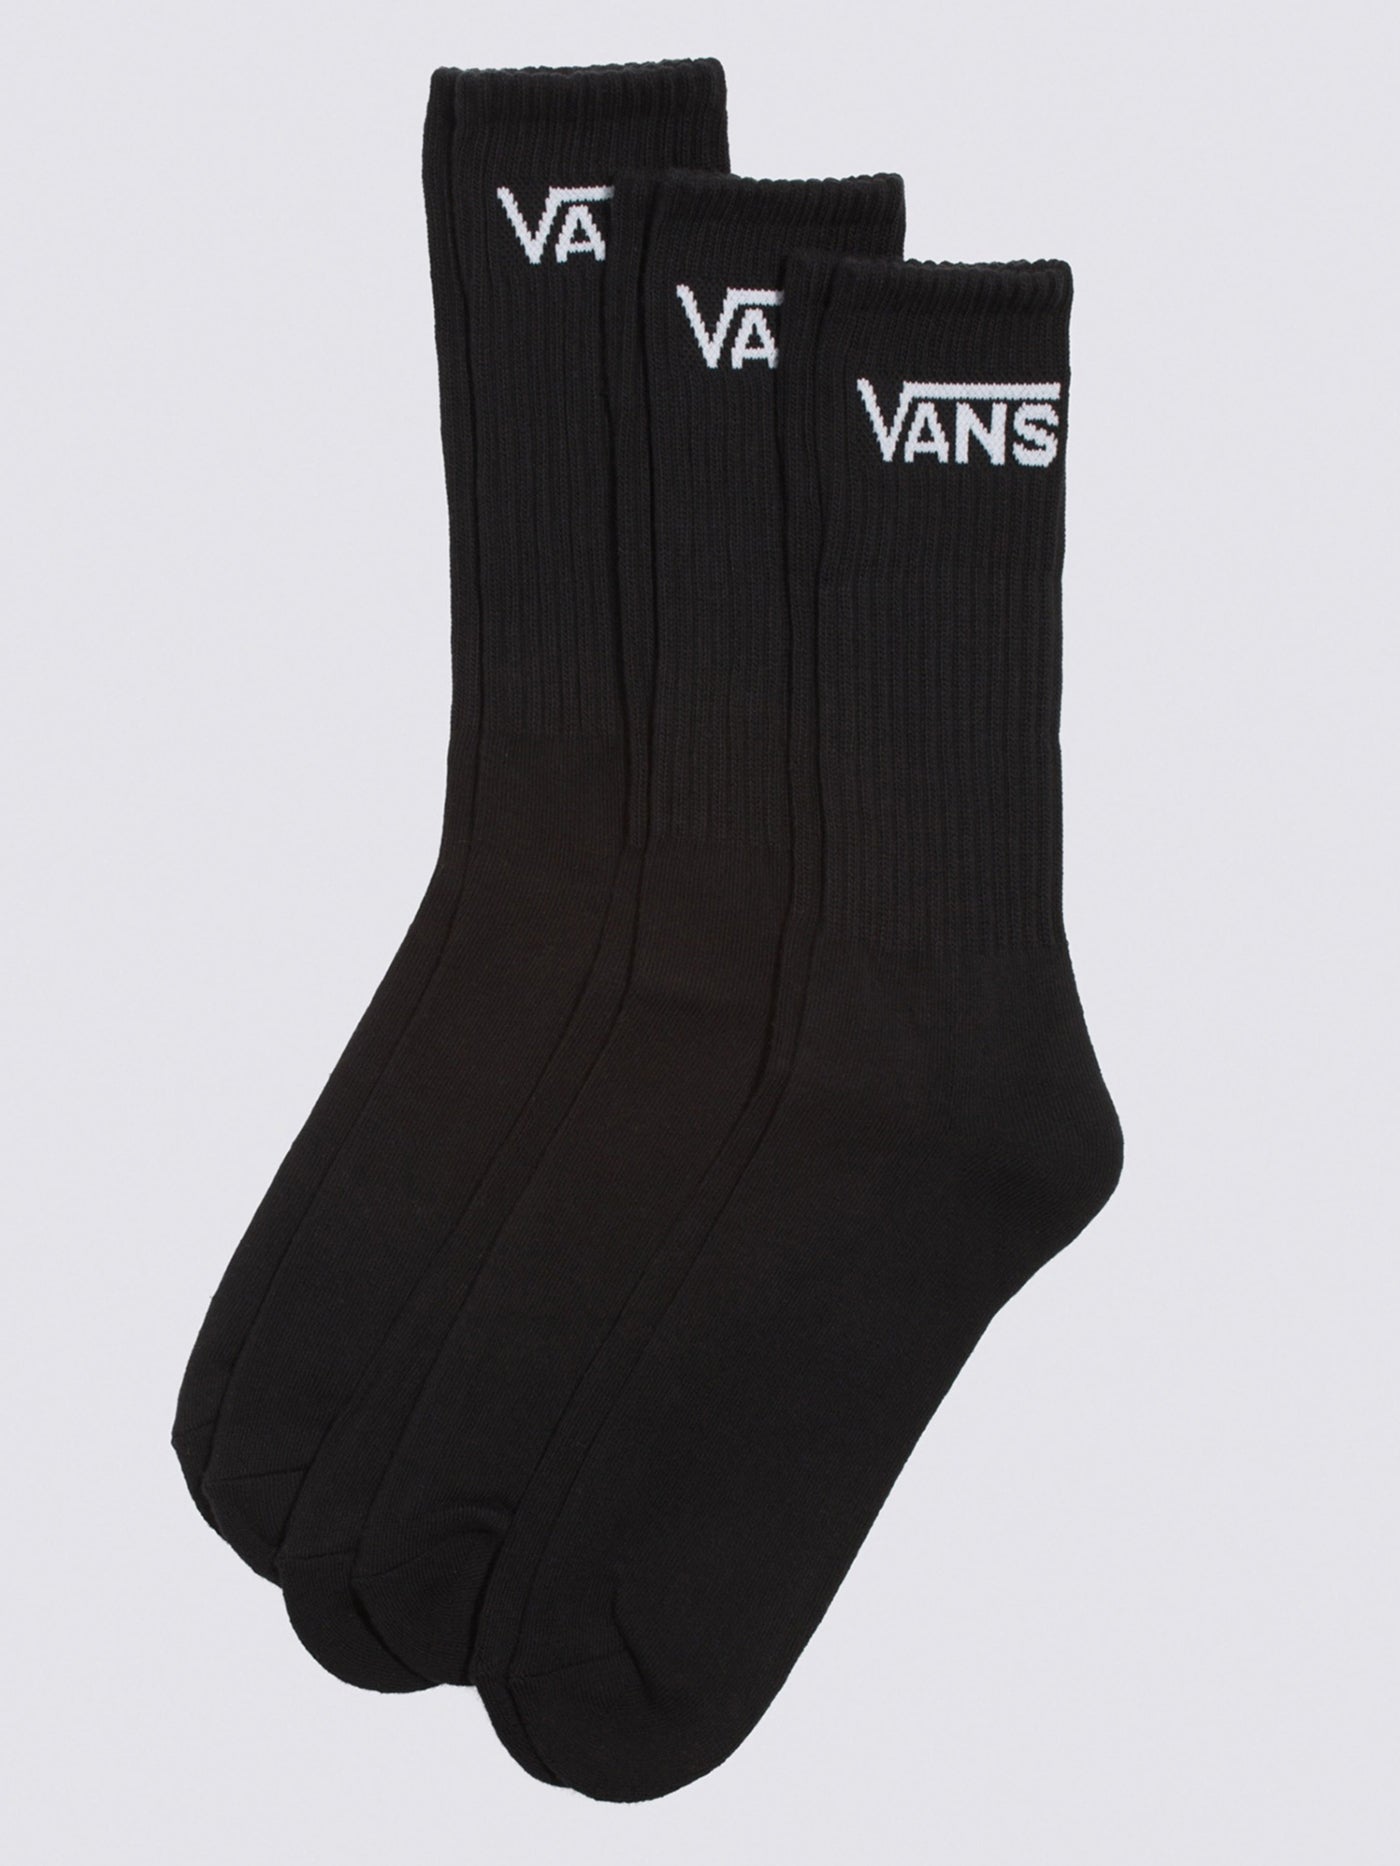 Vans Classic Crew 9.5-13 3 Pack Socks